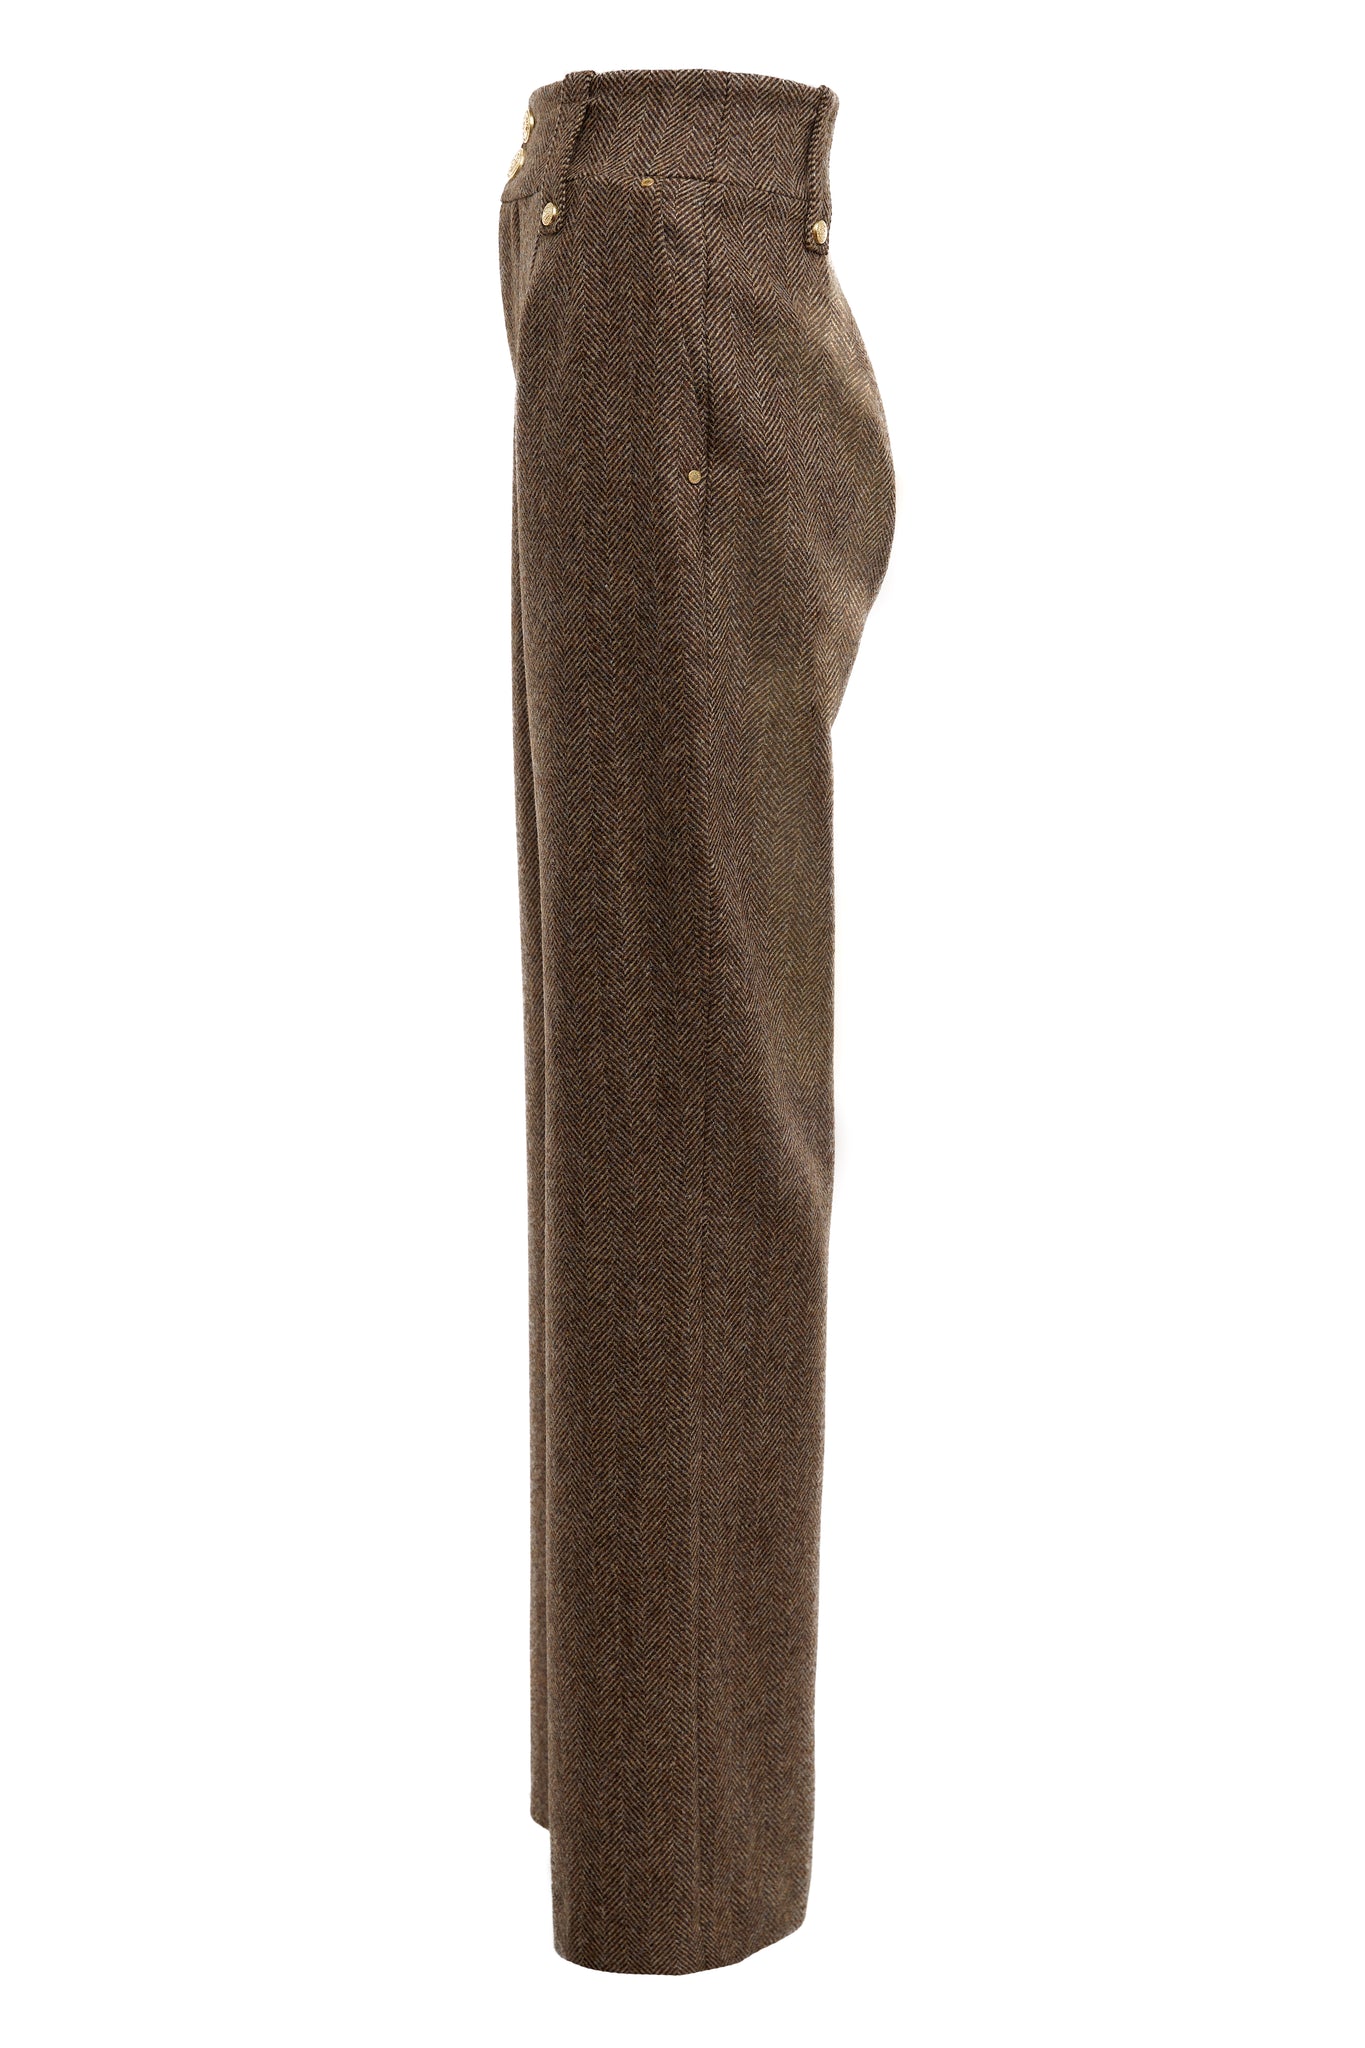 High Waisted Straight Trouser (Large Scale Brown Herringbone)